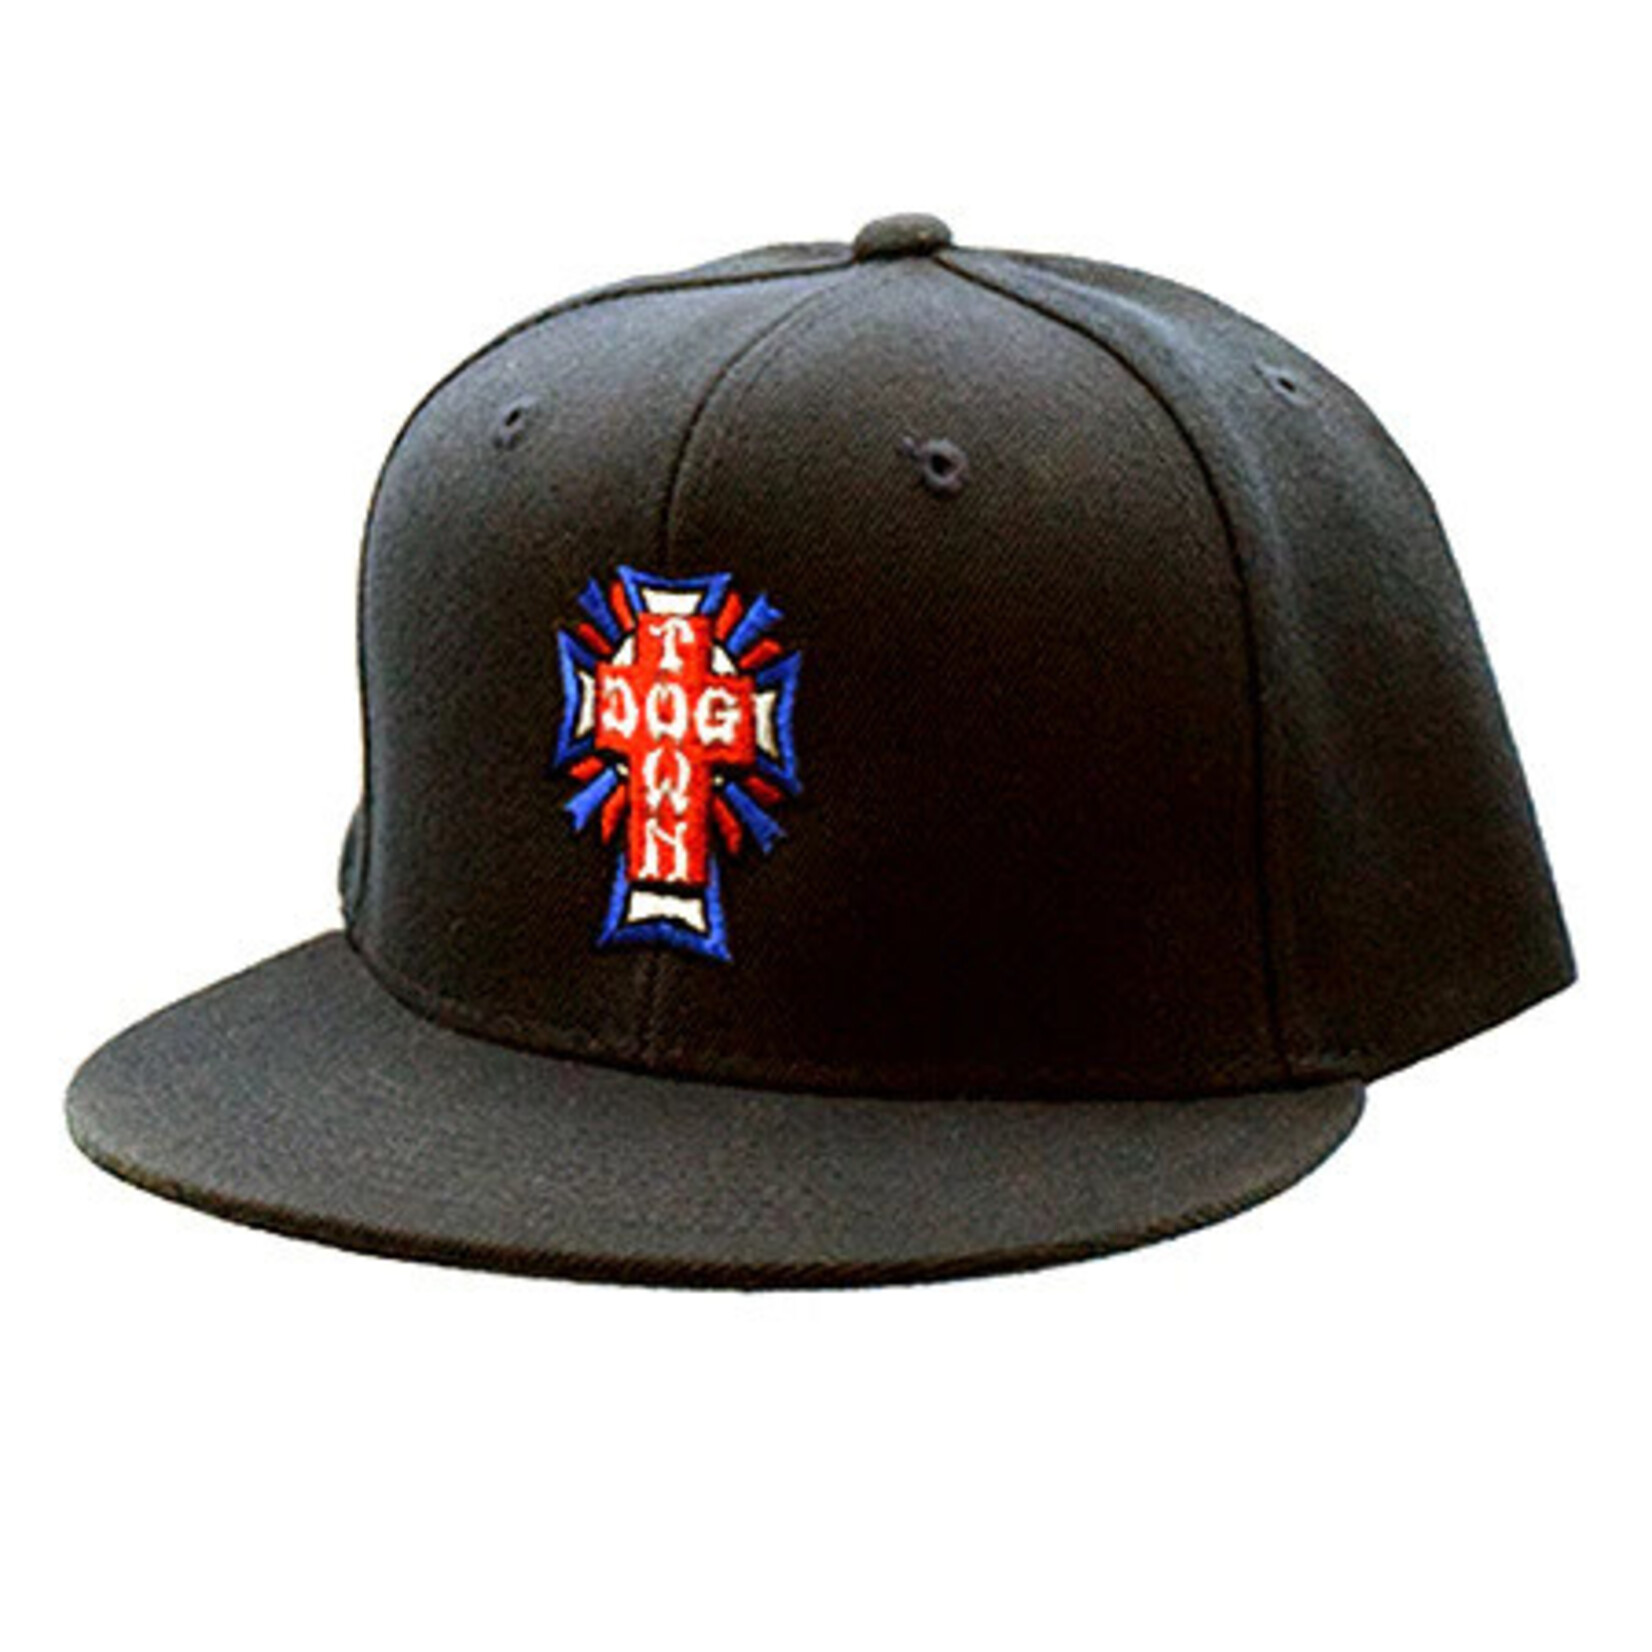 Dogtown Dogtown Cross Logo Color Snapback Hat - Black/USA